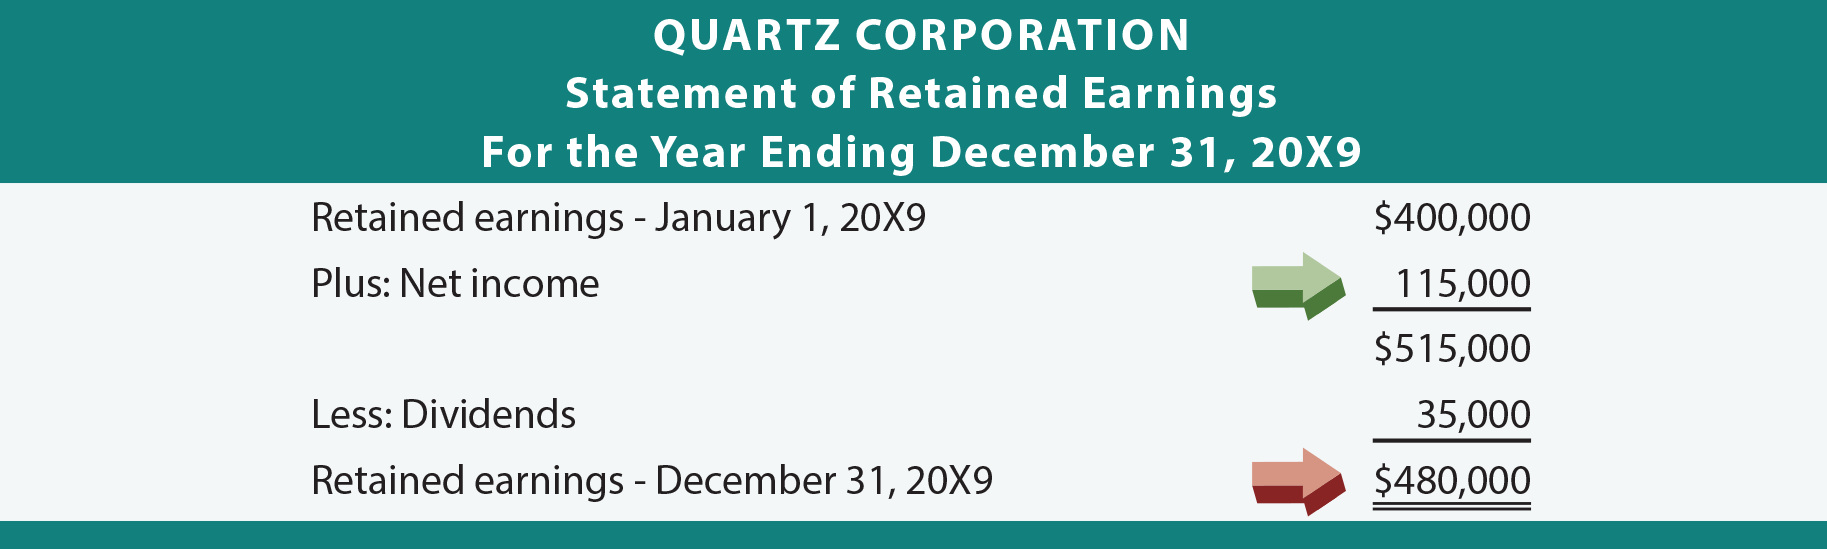 Quartz Corporation Statement of Retained Earnings Self-Balancing